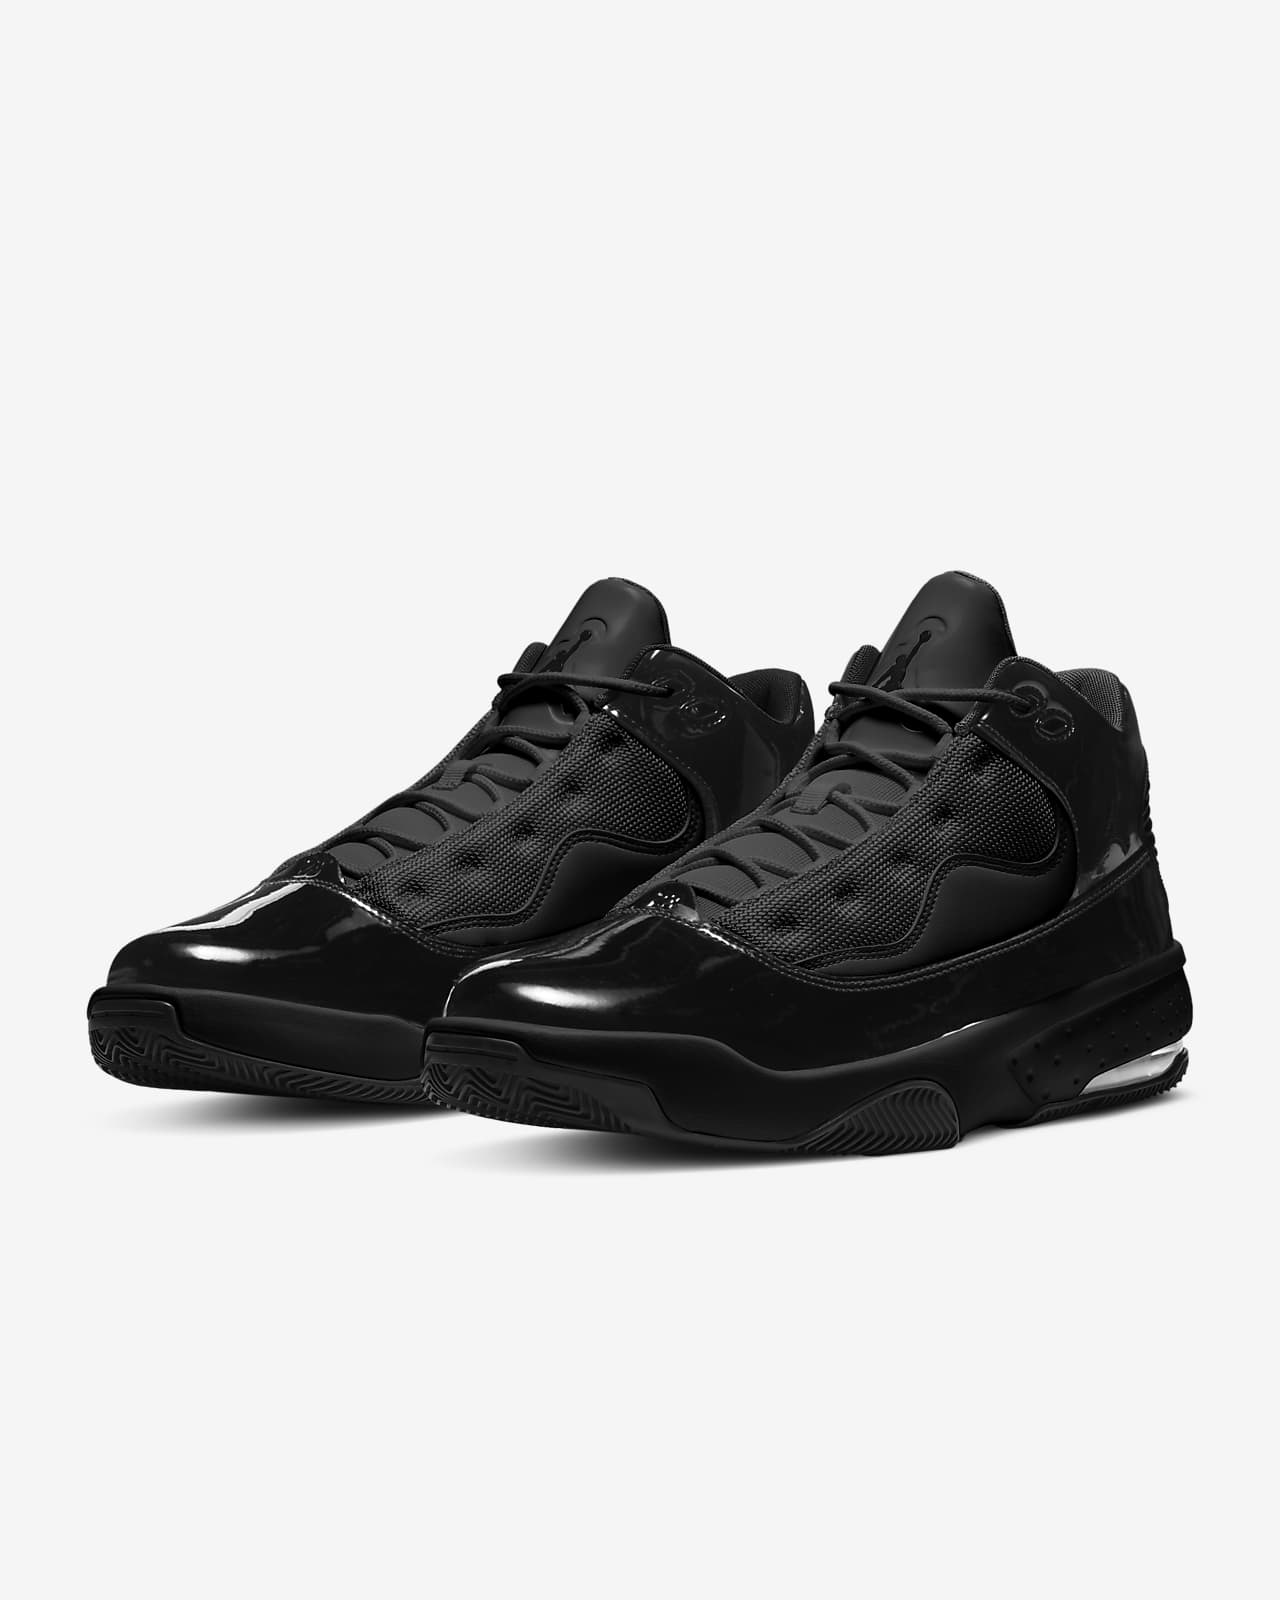 jordan max aura black men's shoe